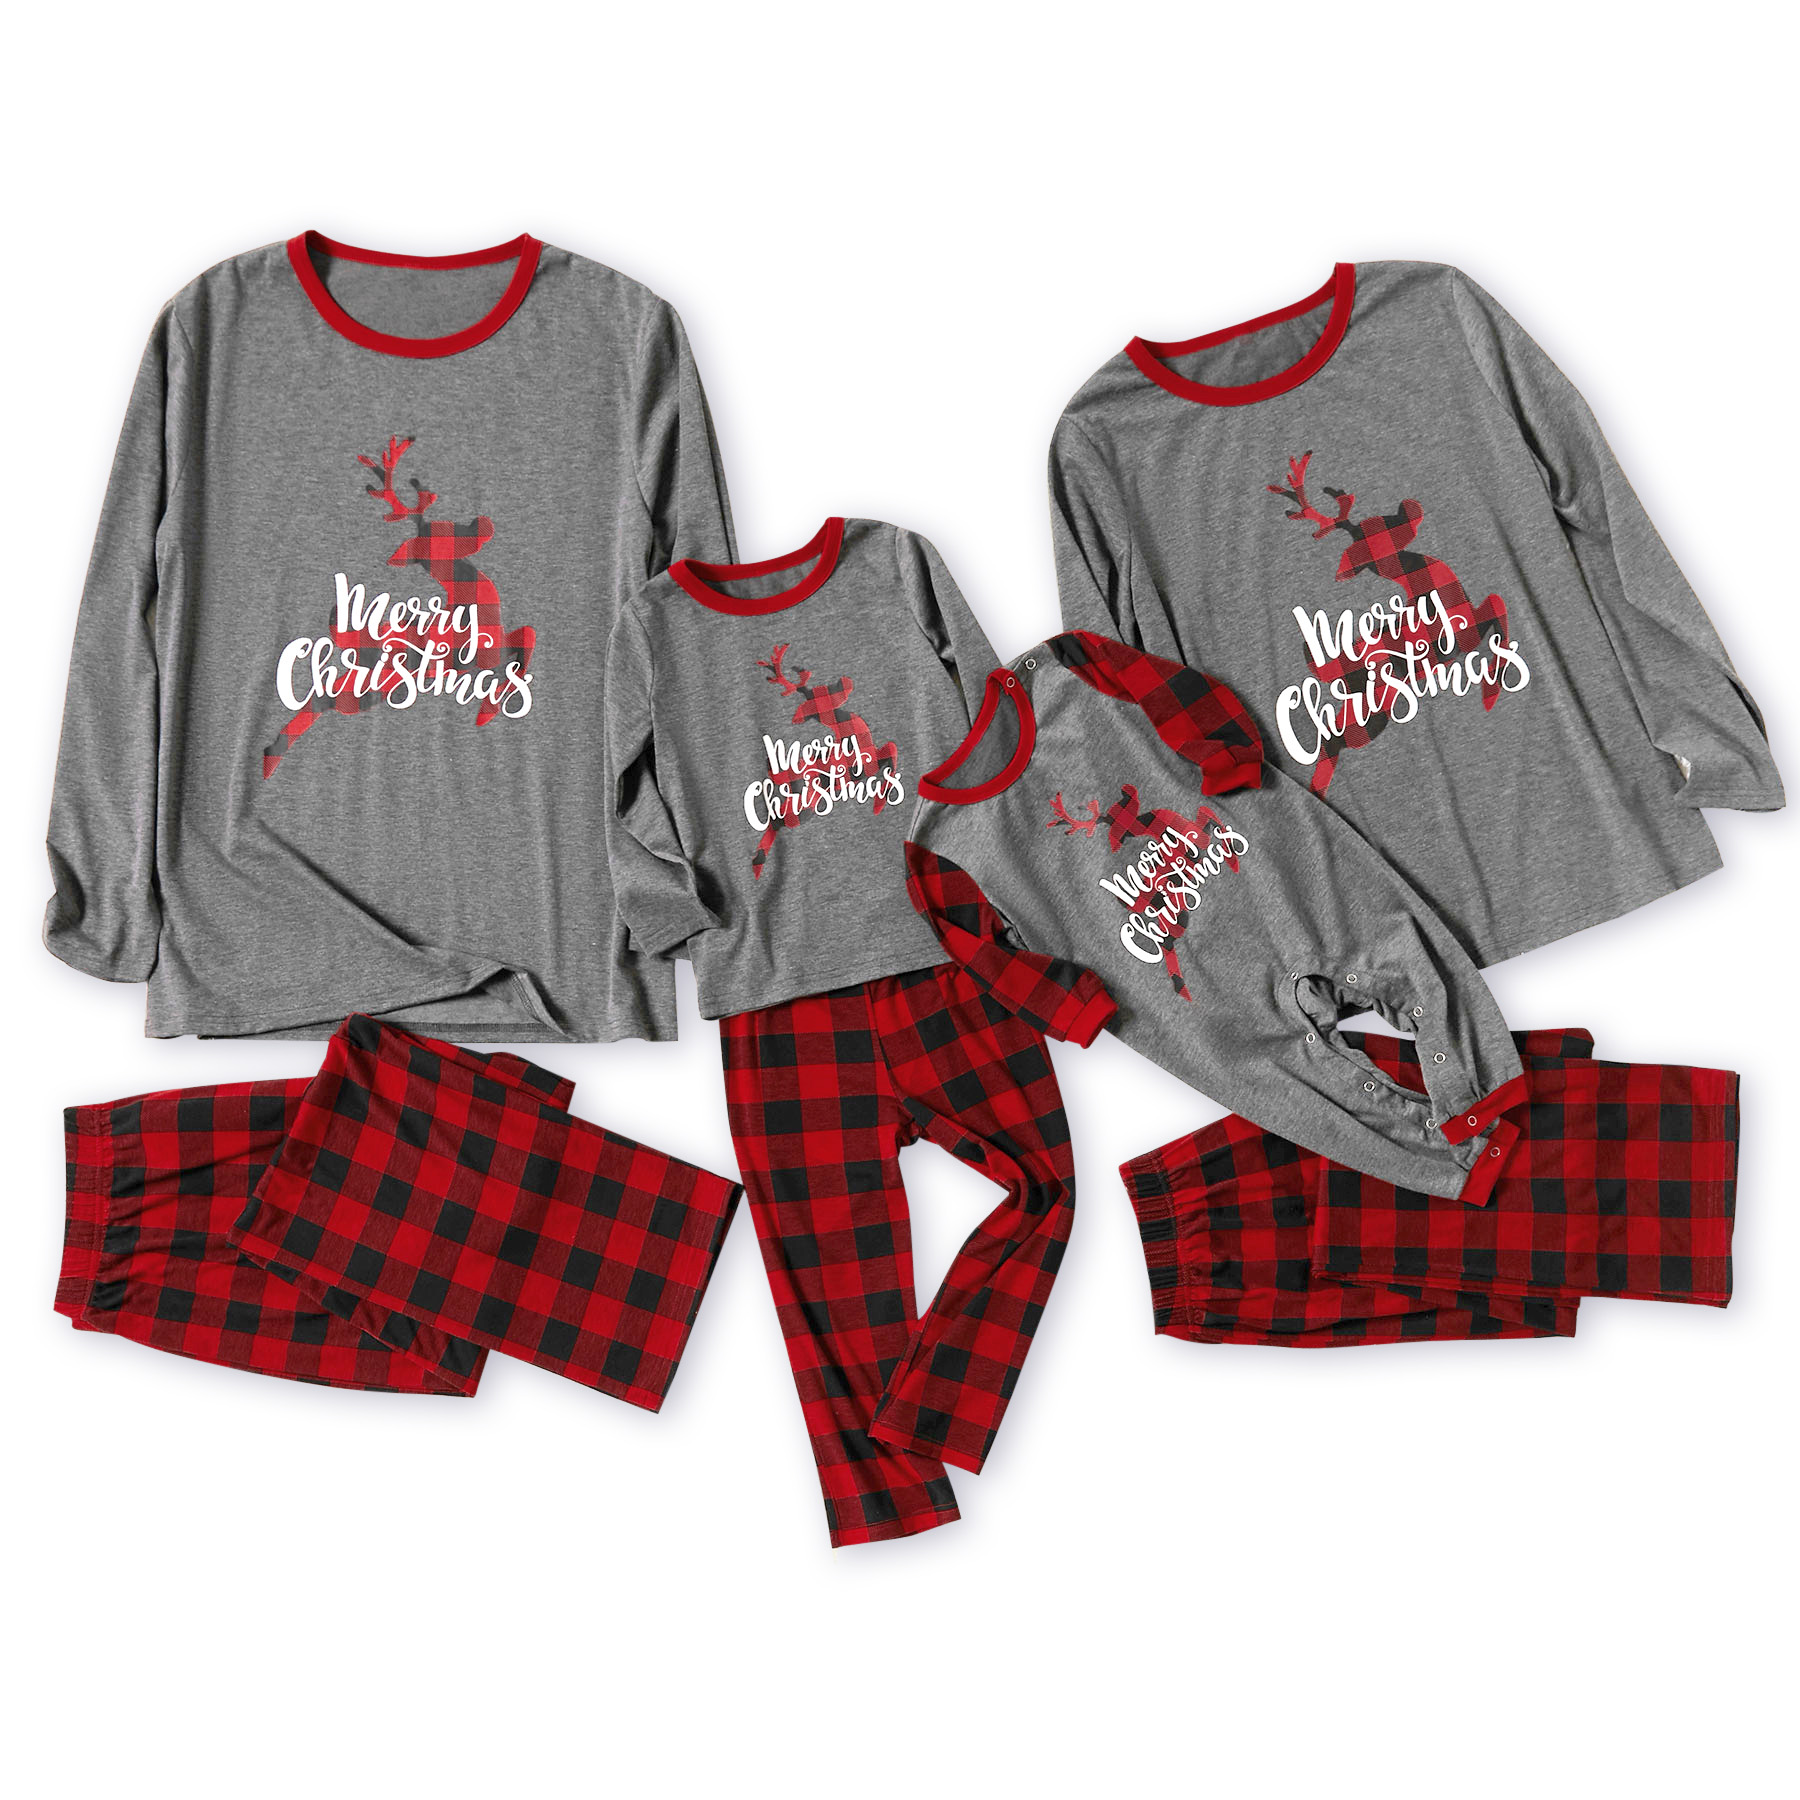 IFFEI Matching Family Pajamas Sets Christmas PJs Sleepwear Merry Christmas Reindeer with Plaid Pants for Kids /& Adult